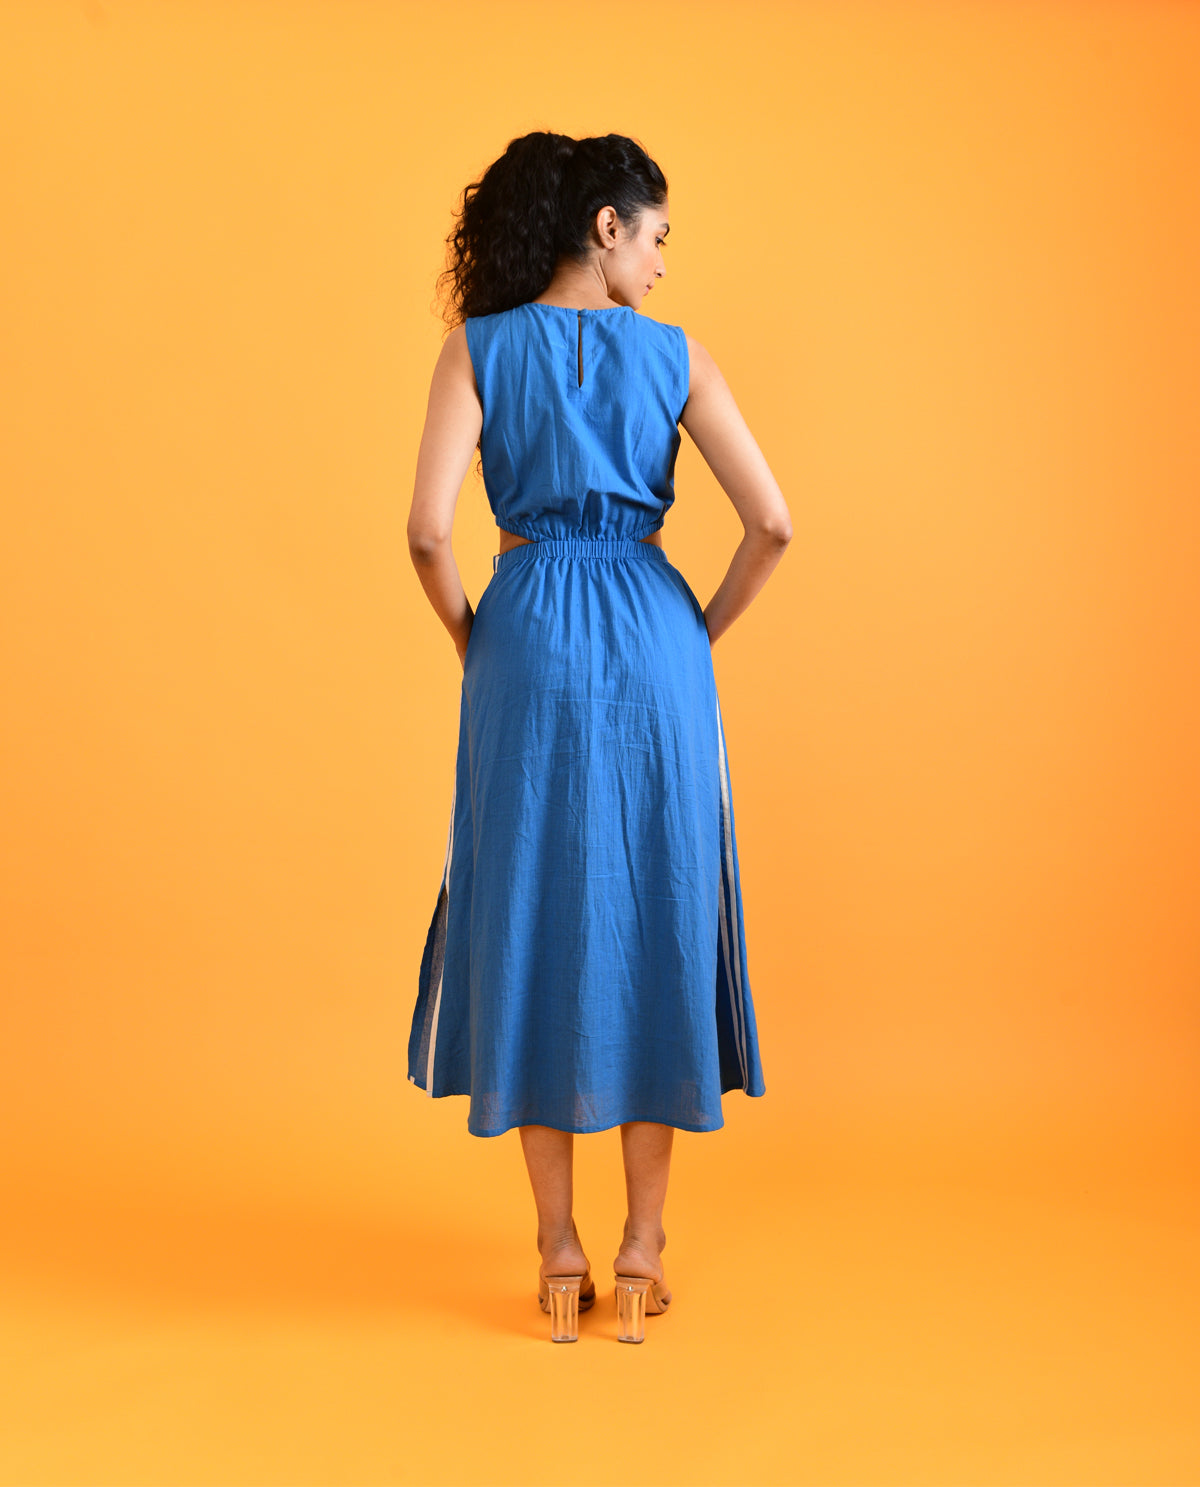 Blue Midi Dress at Kamakhyaa by Rias Jaipur. This item is Blue, Casual Wear, Cut Out Dresses, Handloom Cotton, Handspun, Handwoven, Hue, Midi Dresses, Sleeveless Dresses, Slim Fit, Solids, Stripes, Womenswear